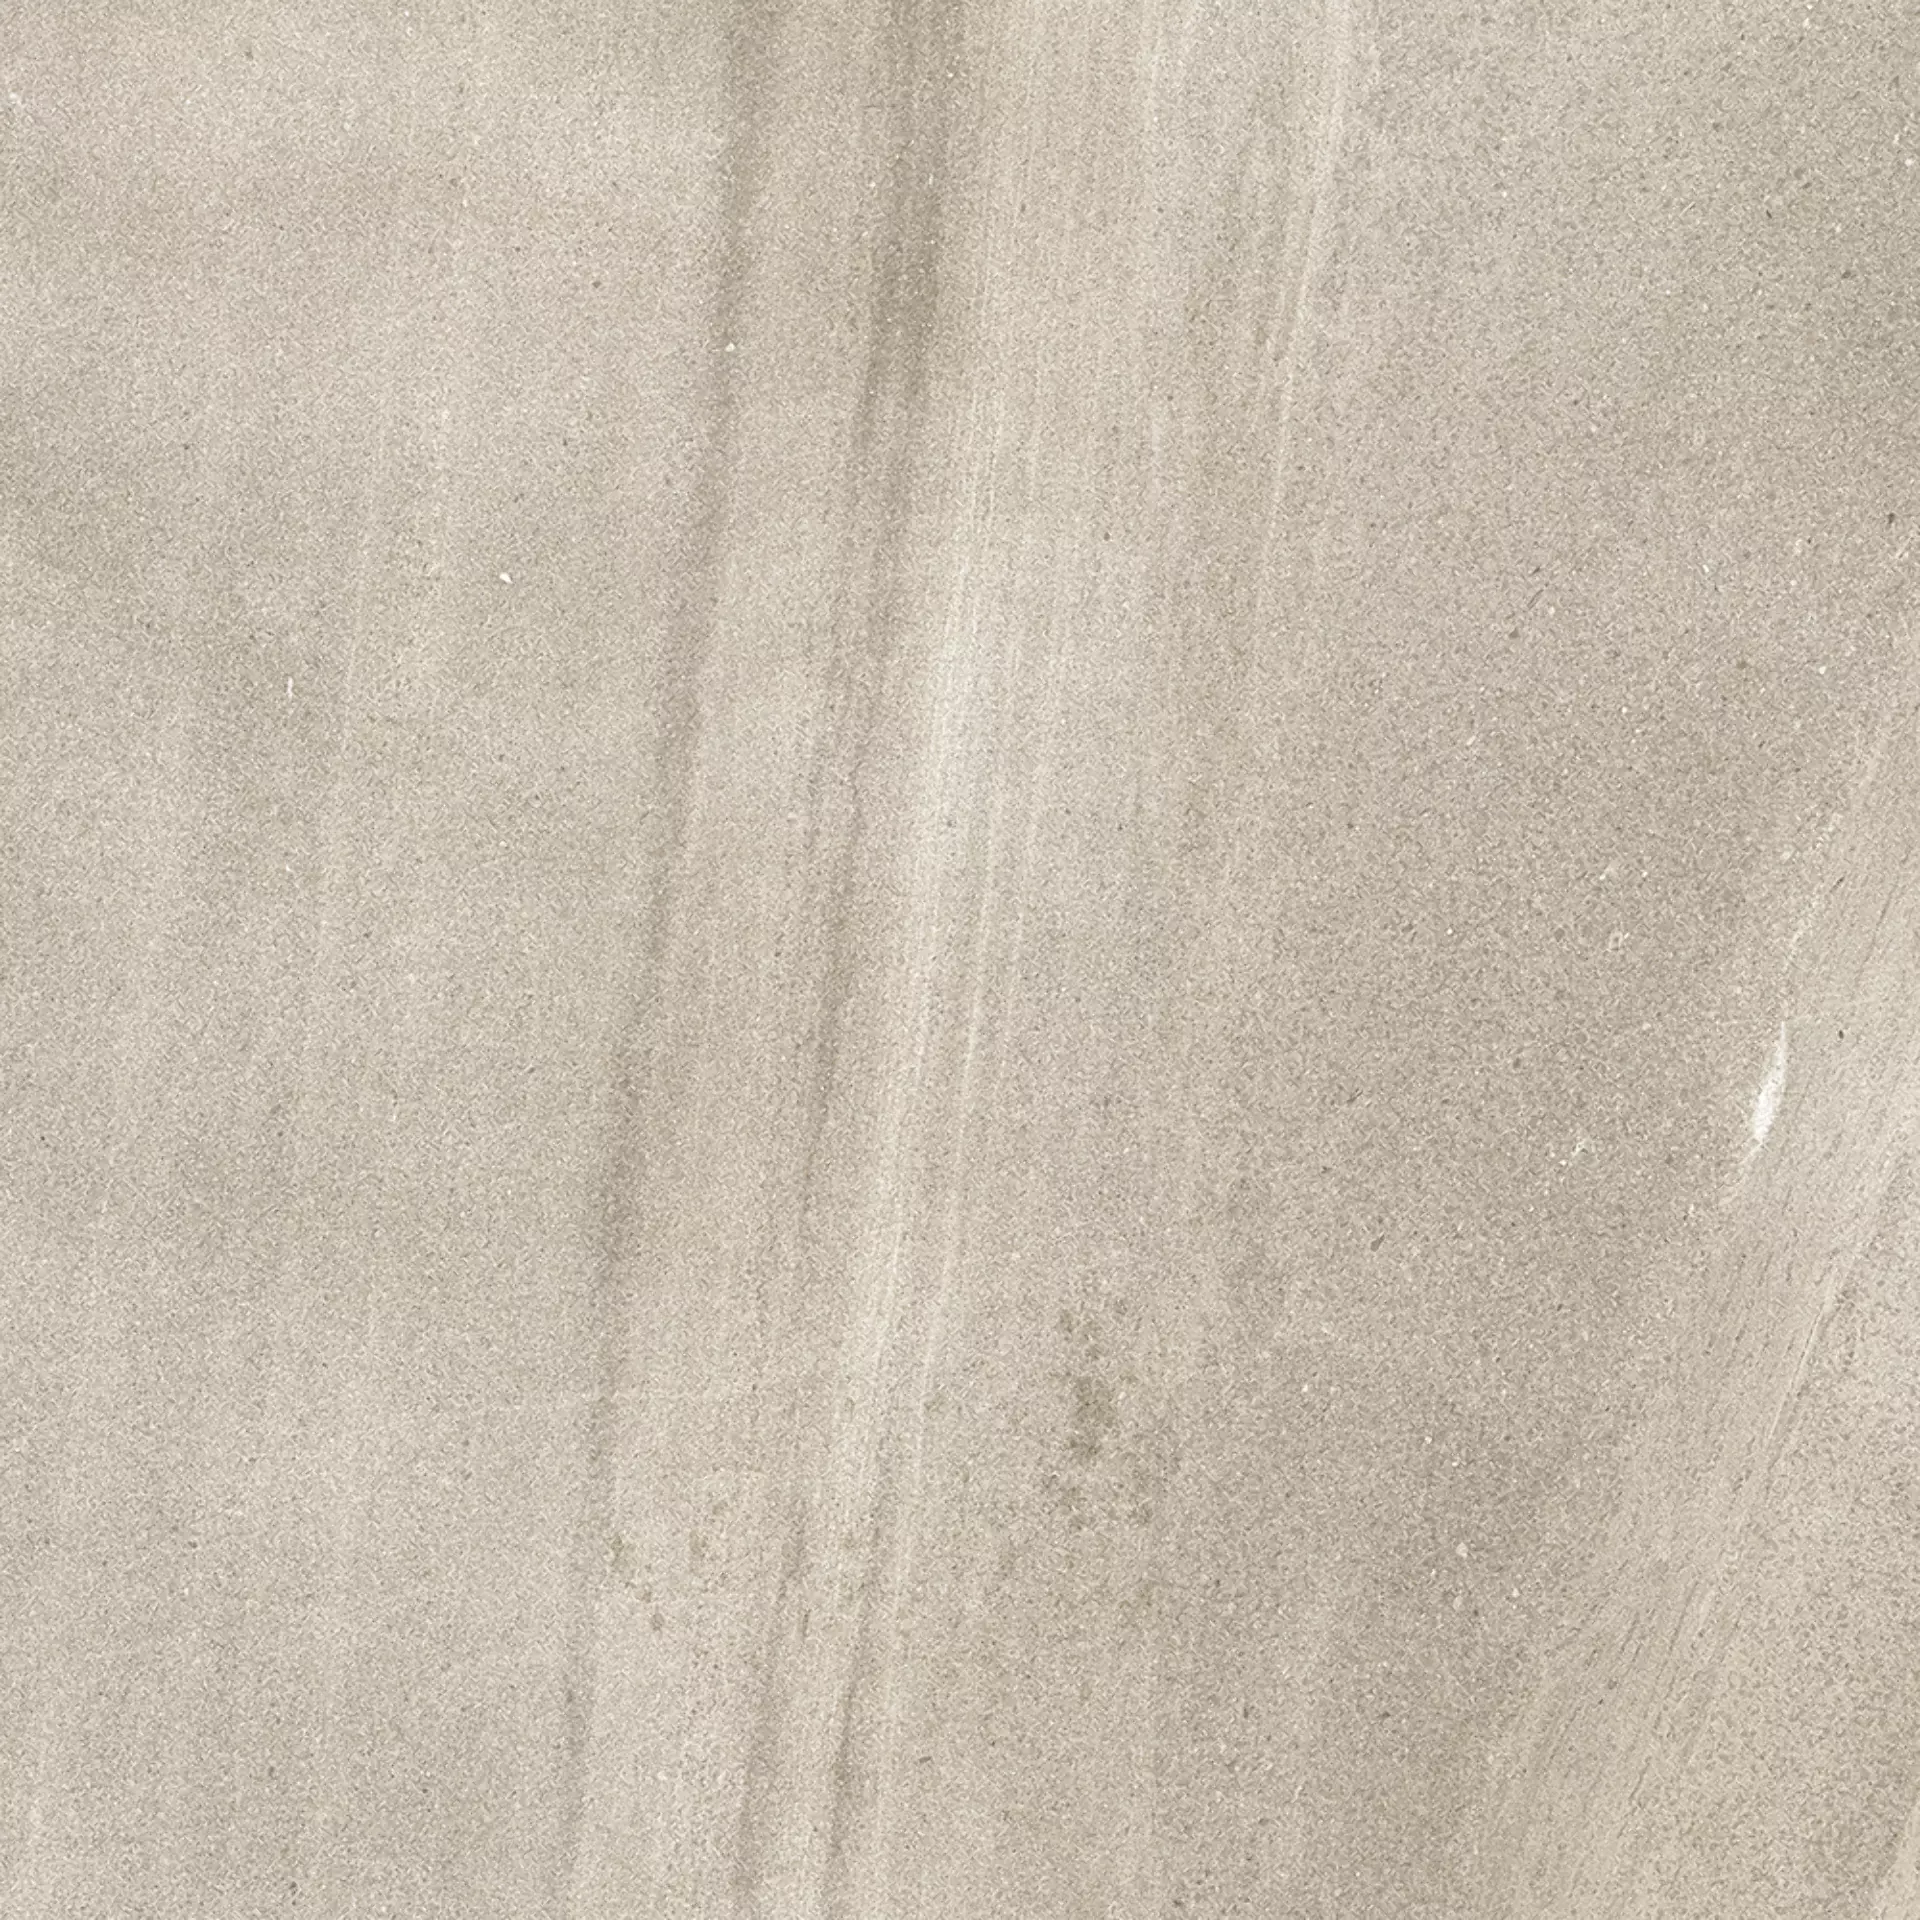 Ariostea Ultra Pietre Basaltina Sand Prelucidato UP6P100445 100x100cm rectified 6mm